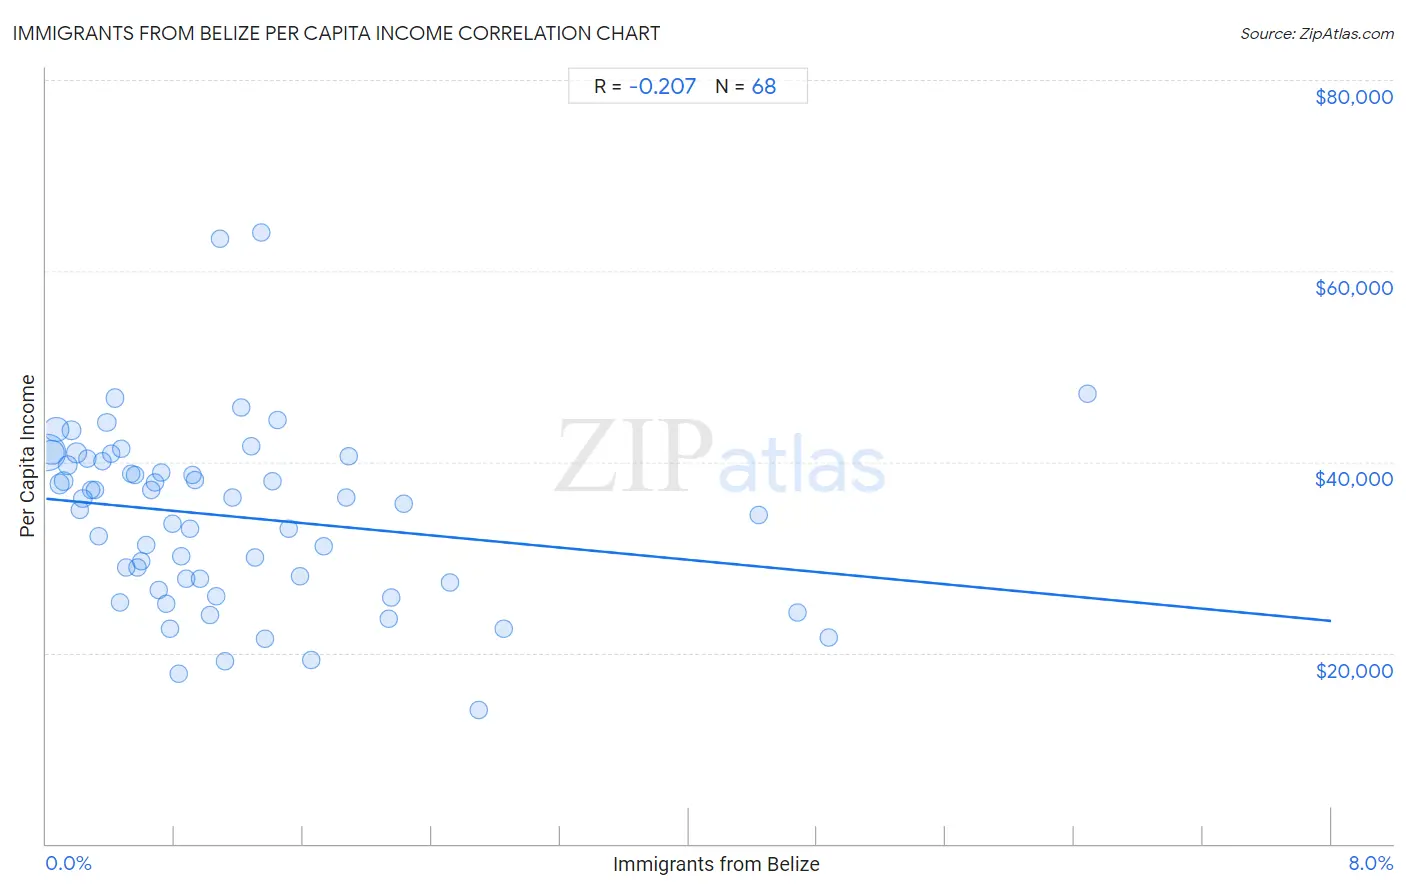 Immigrants from Belize Per Capita Income